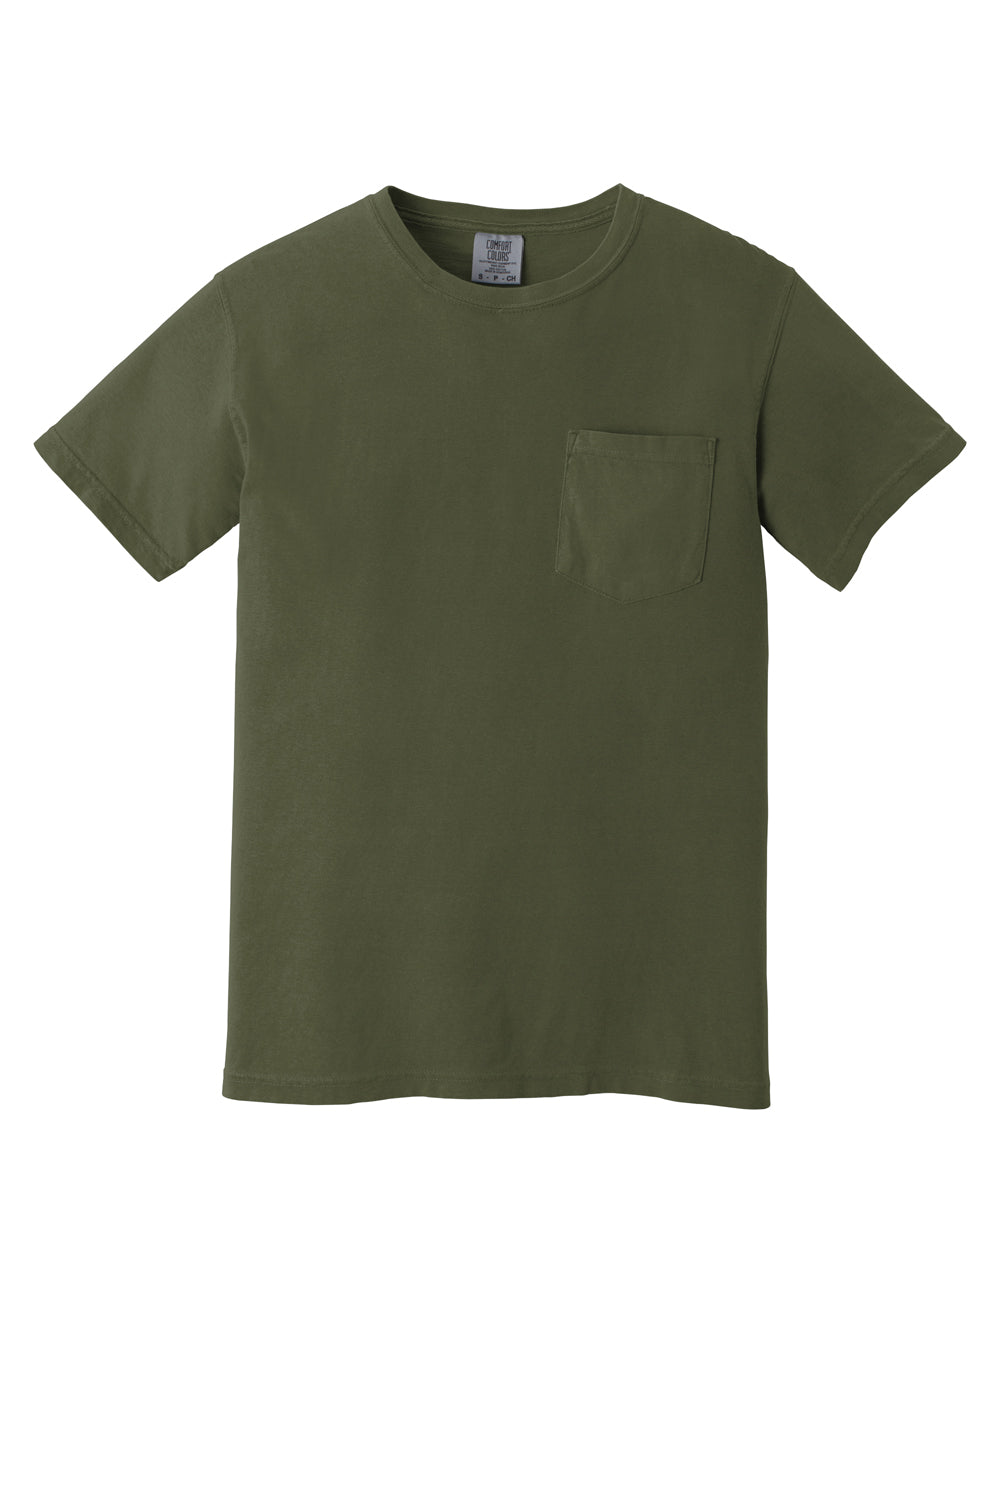 Comfort Colors Mens Short Sleeve Crewneck T-Shirt w/ Pocket Sage Green Flat Front